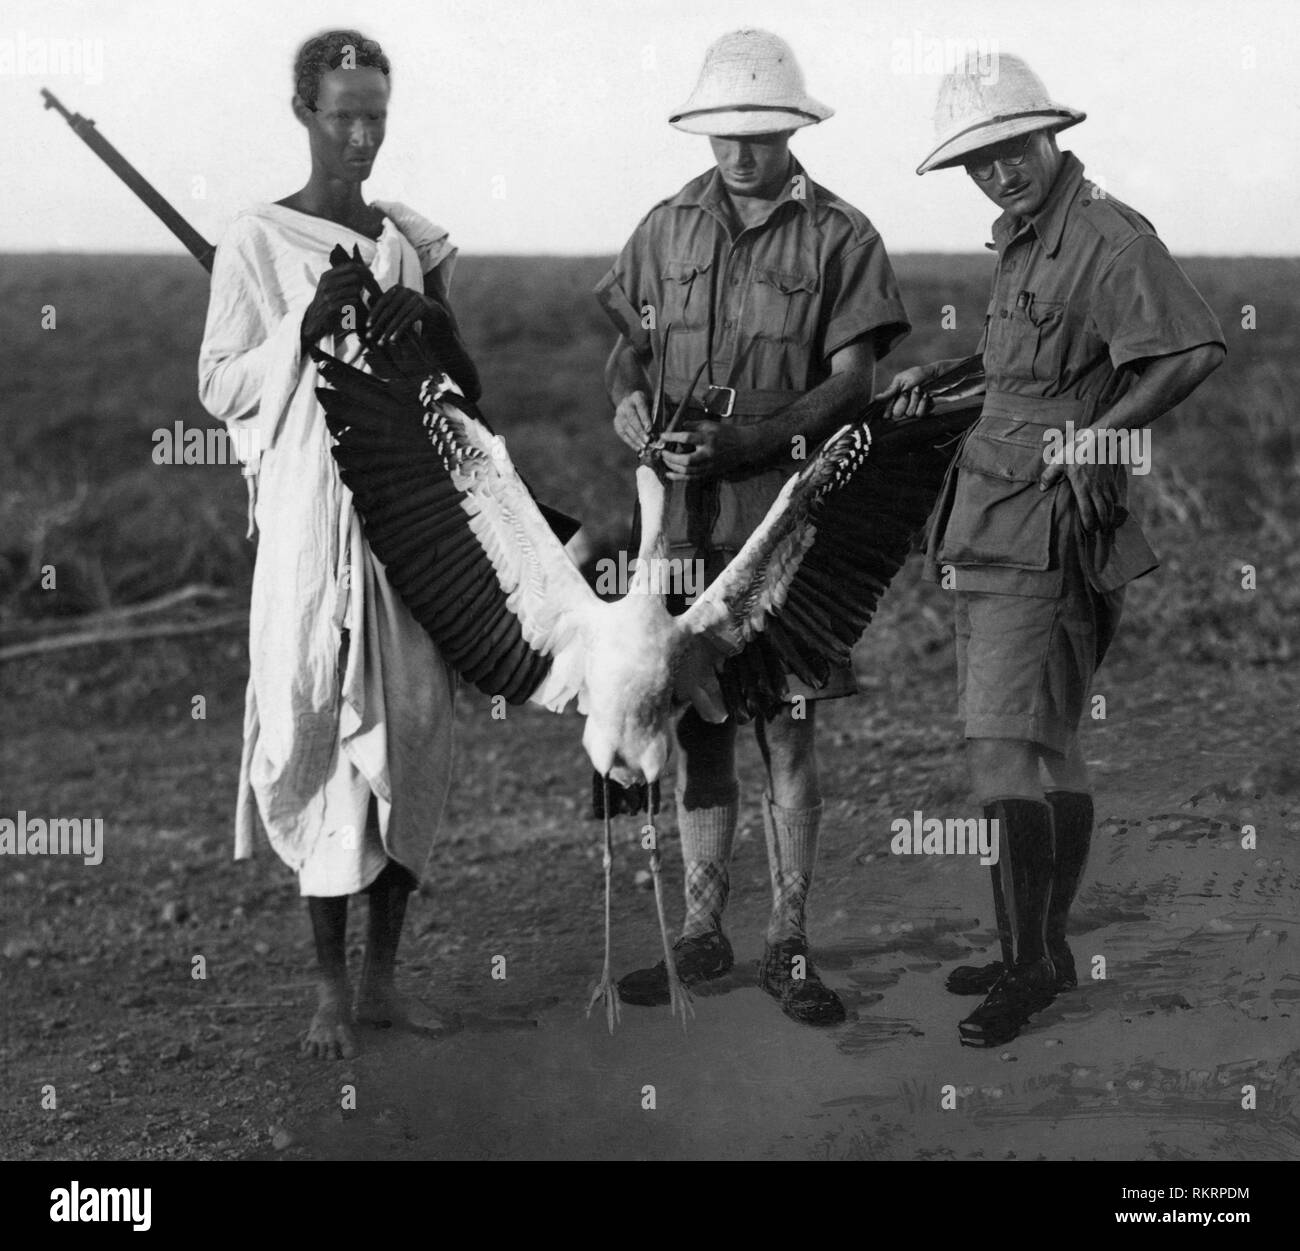 Wader, El gorum, Somalia, Afrika 1930-40 Stockfoto